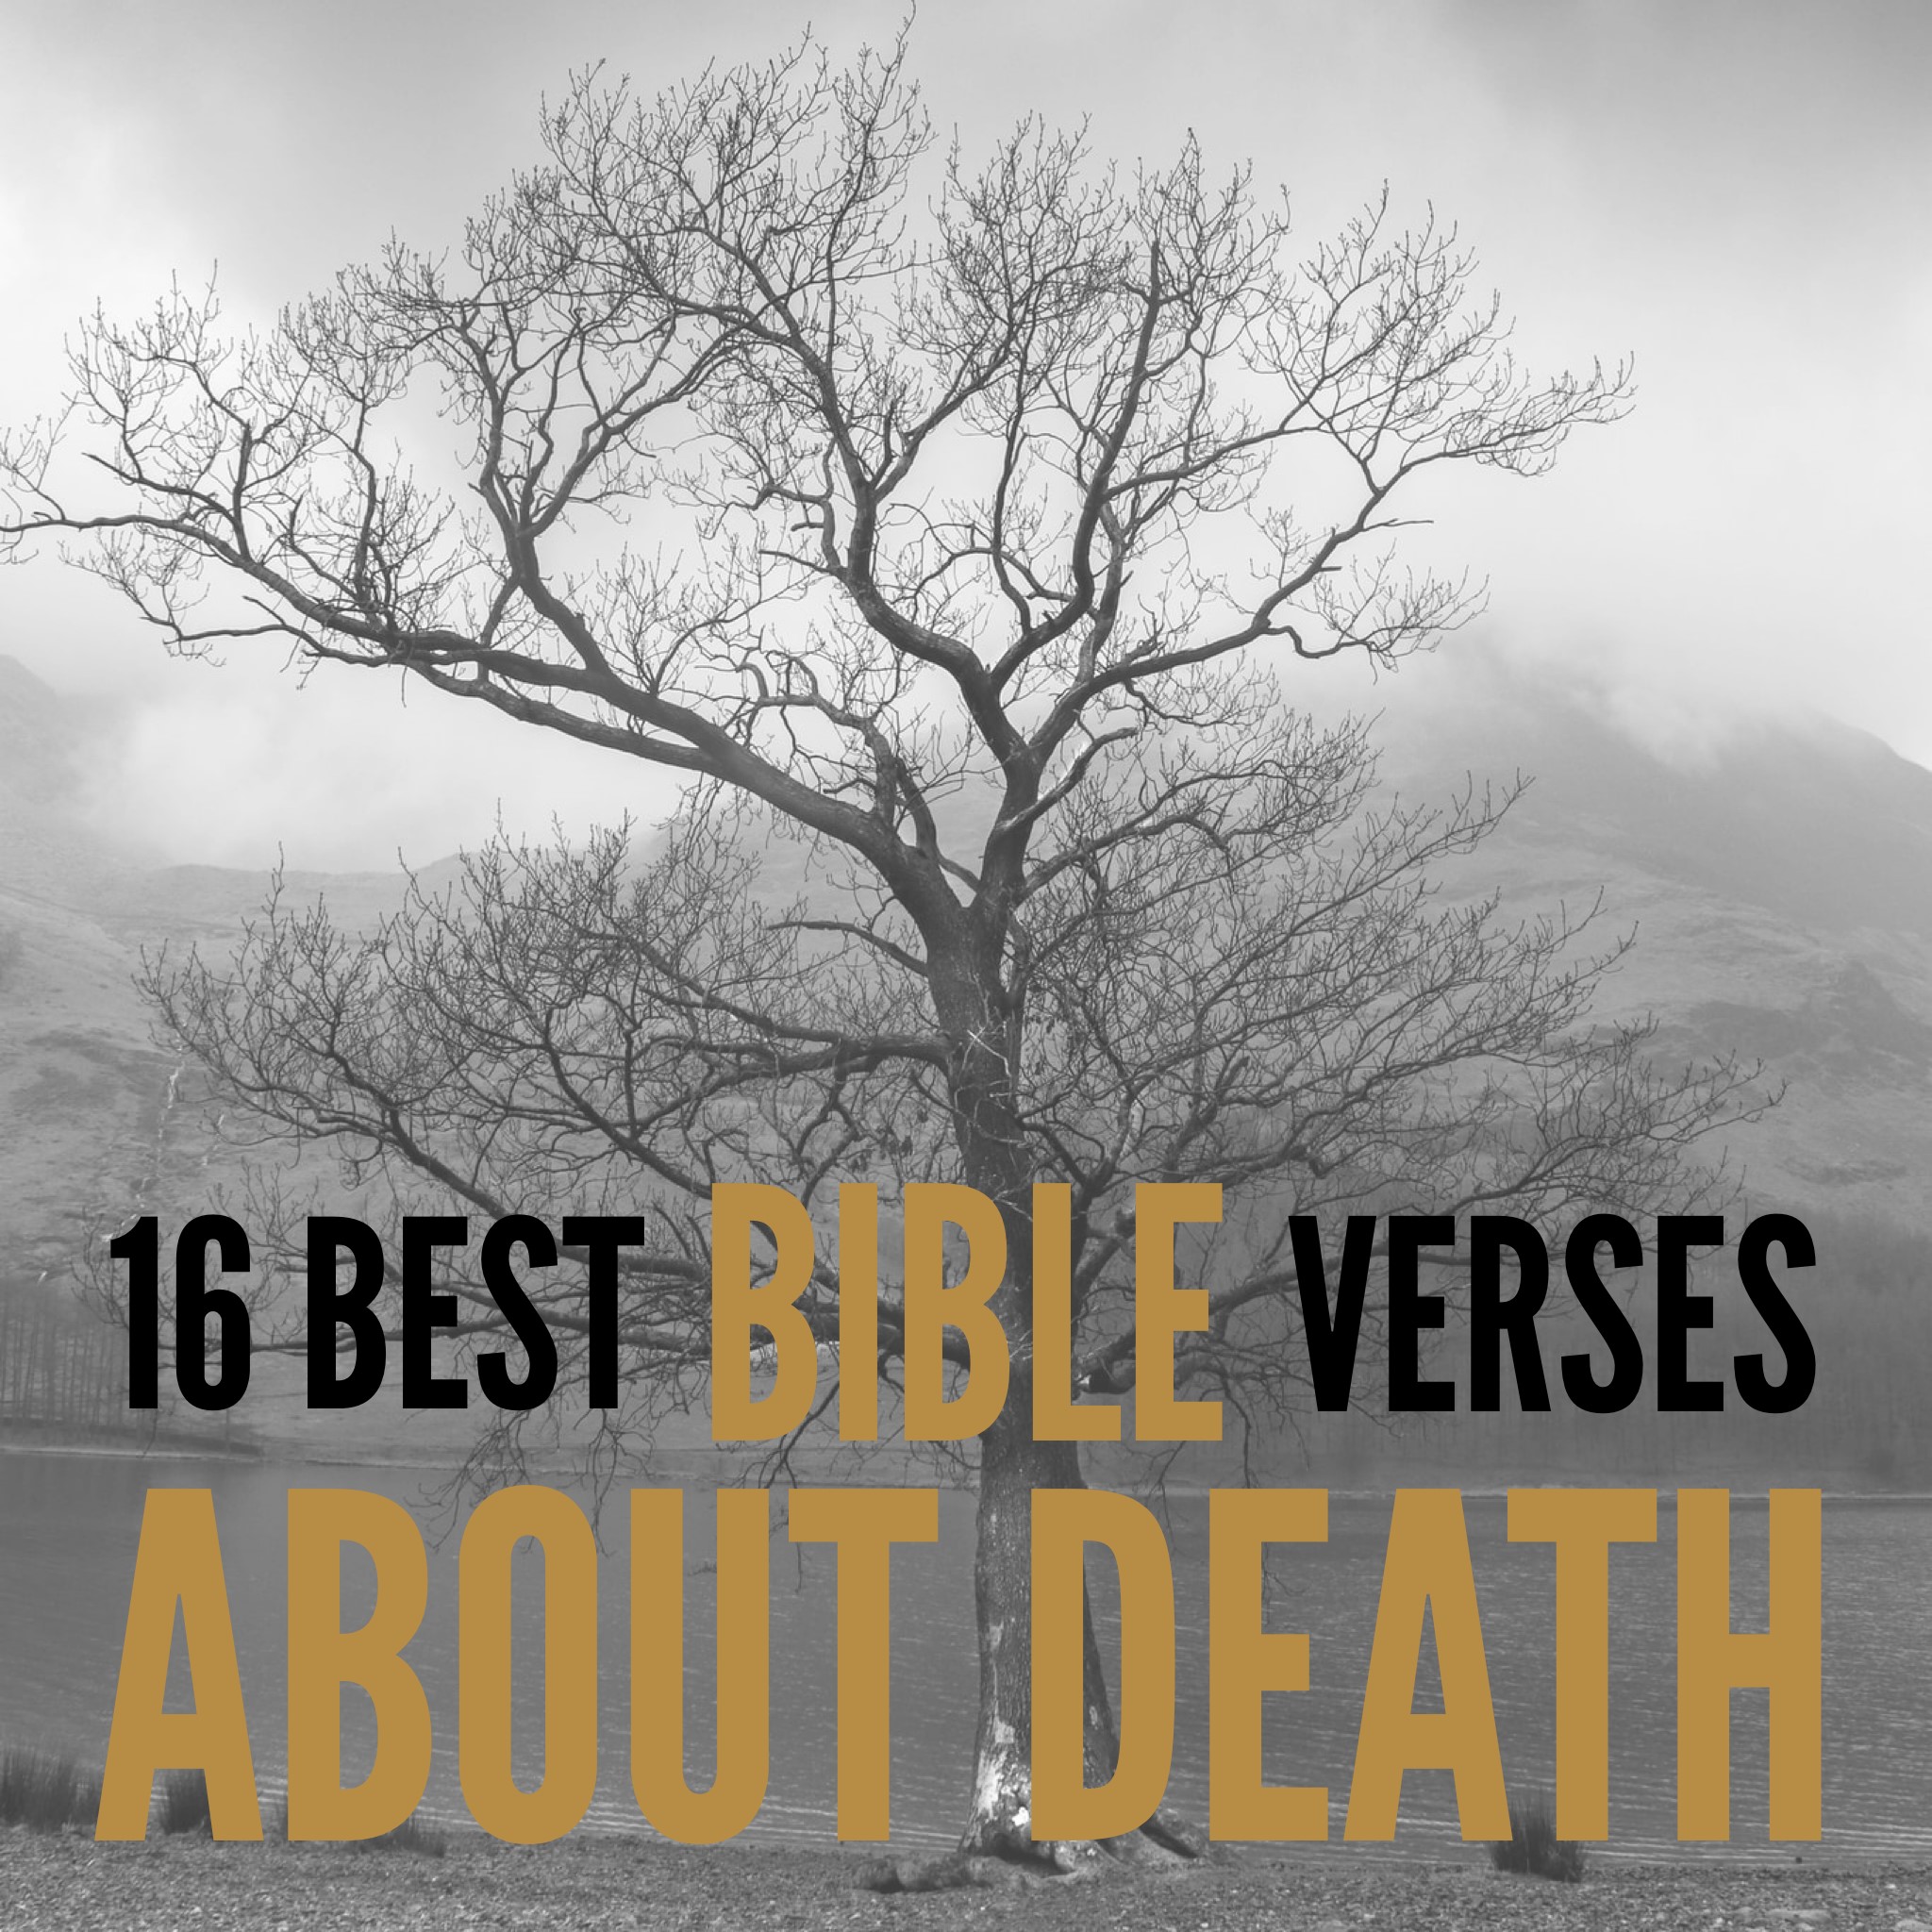 16 Best Bible Verses about Death